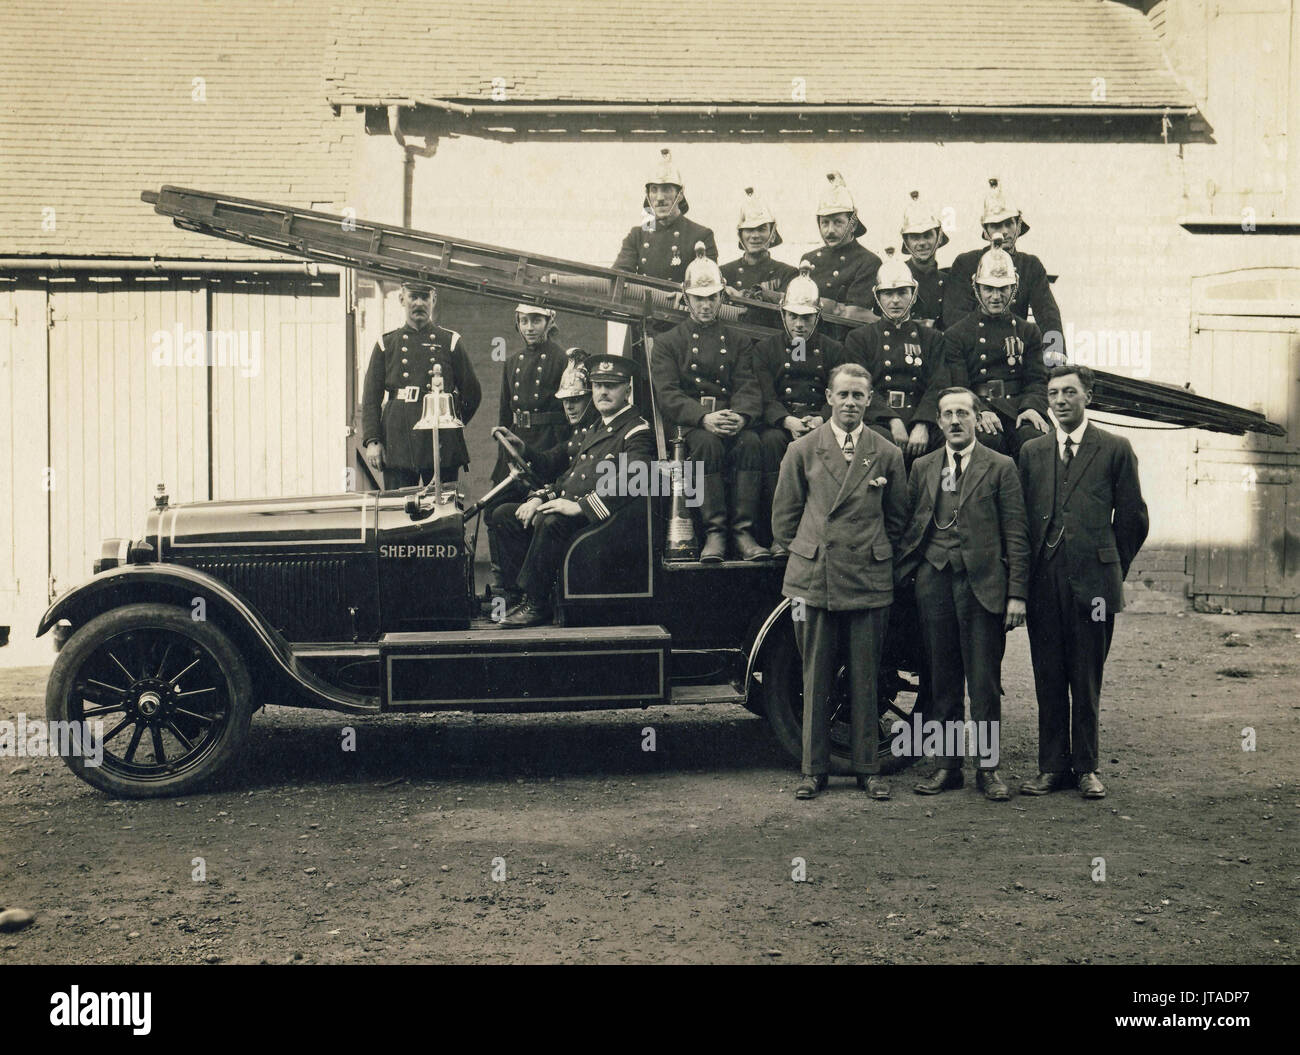 Fire engine, Fire brigade, c1930s, historic archive photograph Stock Photo